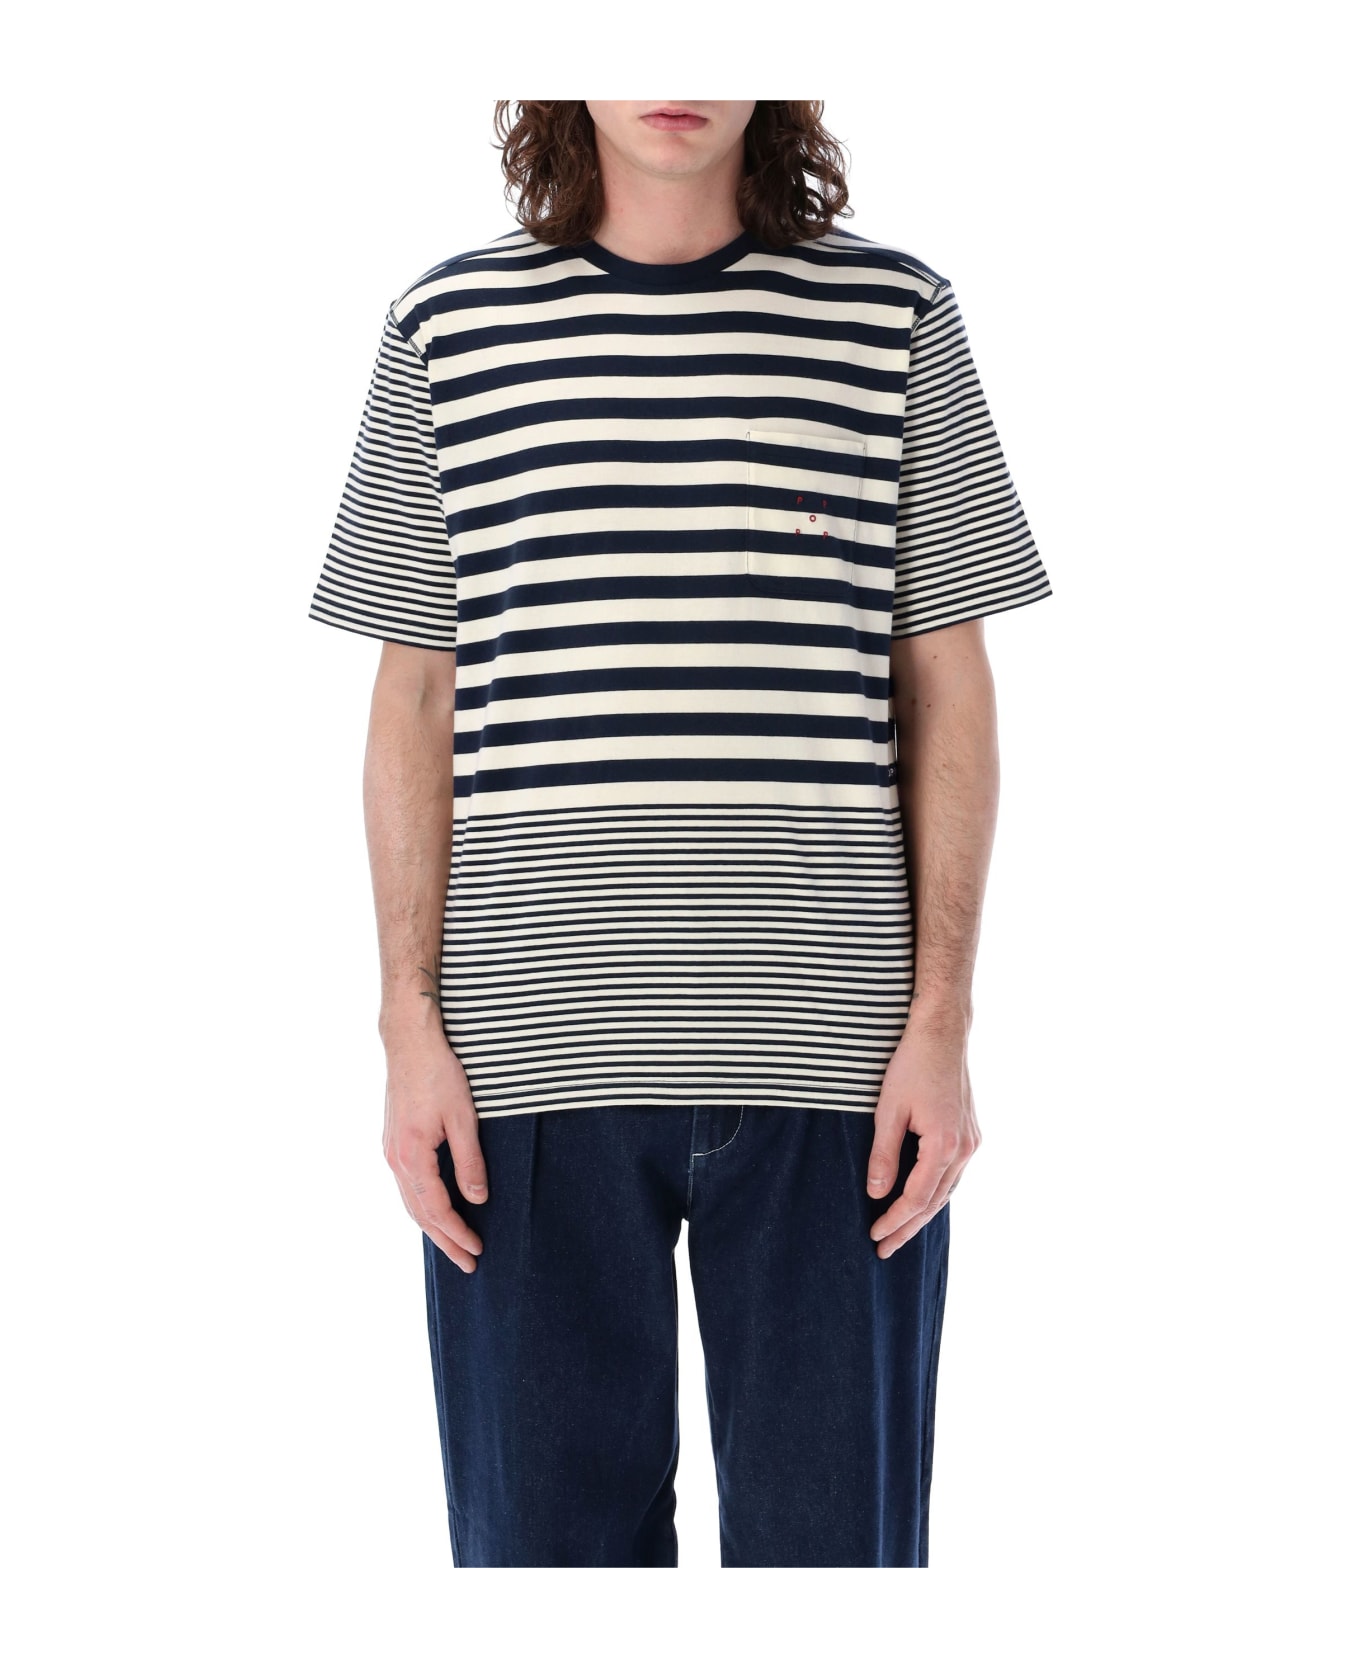 Pop Trading Company Pop Striped Pocket T-shirt - NAVY OFF WHITE